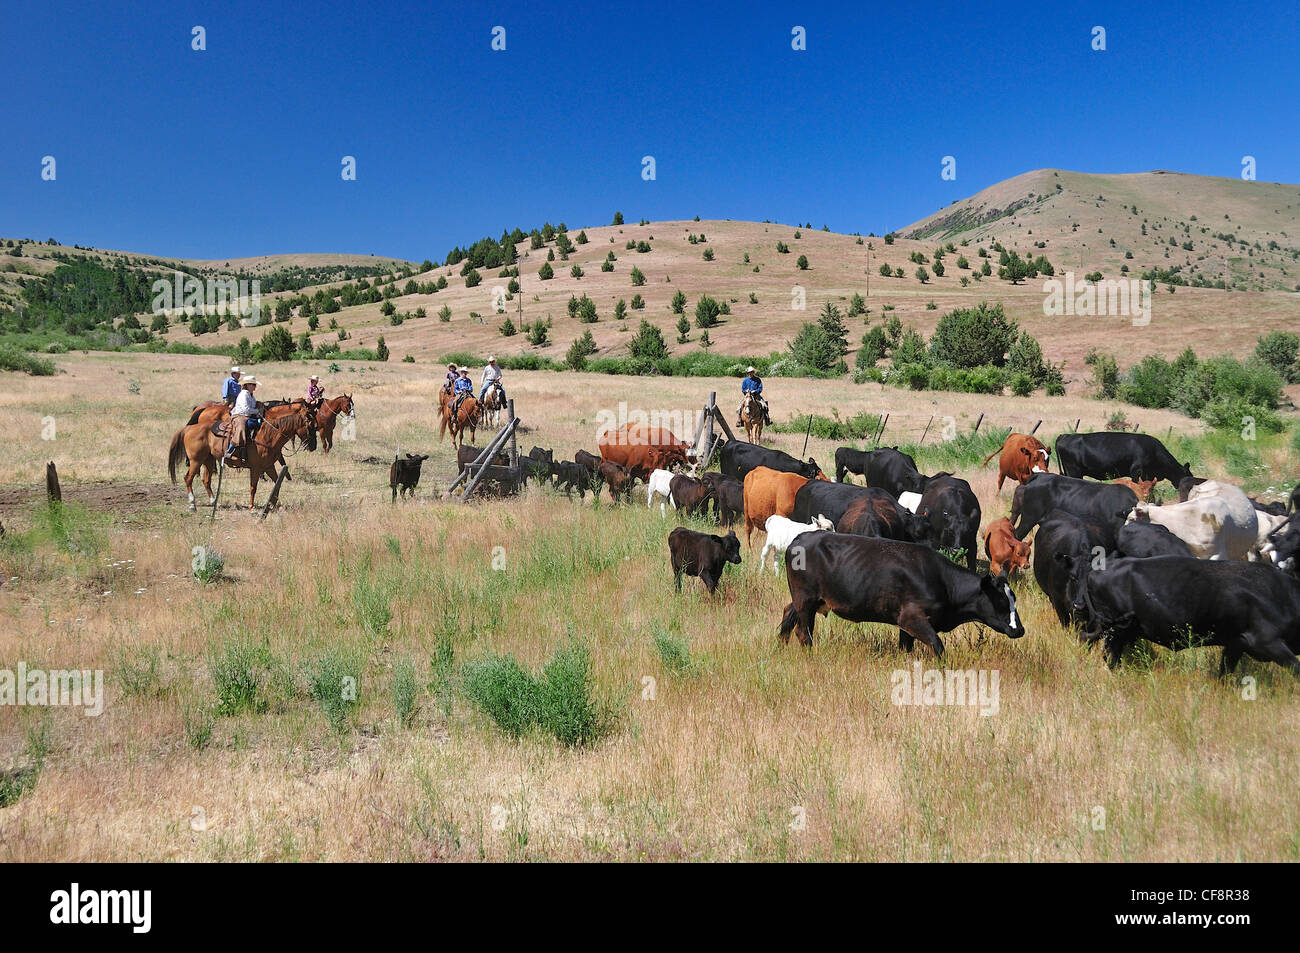 Wilson Ranch, fossili, Oregon, Stati Uniti d'America, Stati Uniti, America, Cattle Drive, cowboy, cowboy, cavalli Foto Stock